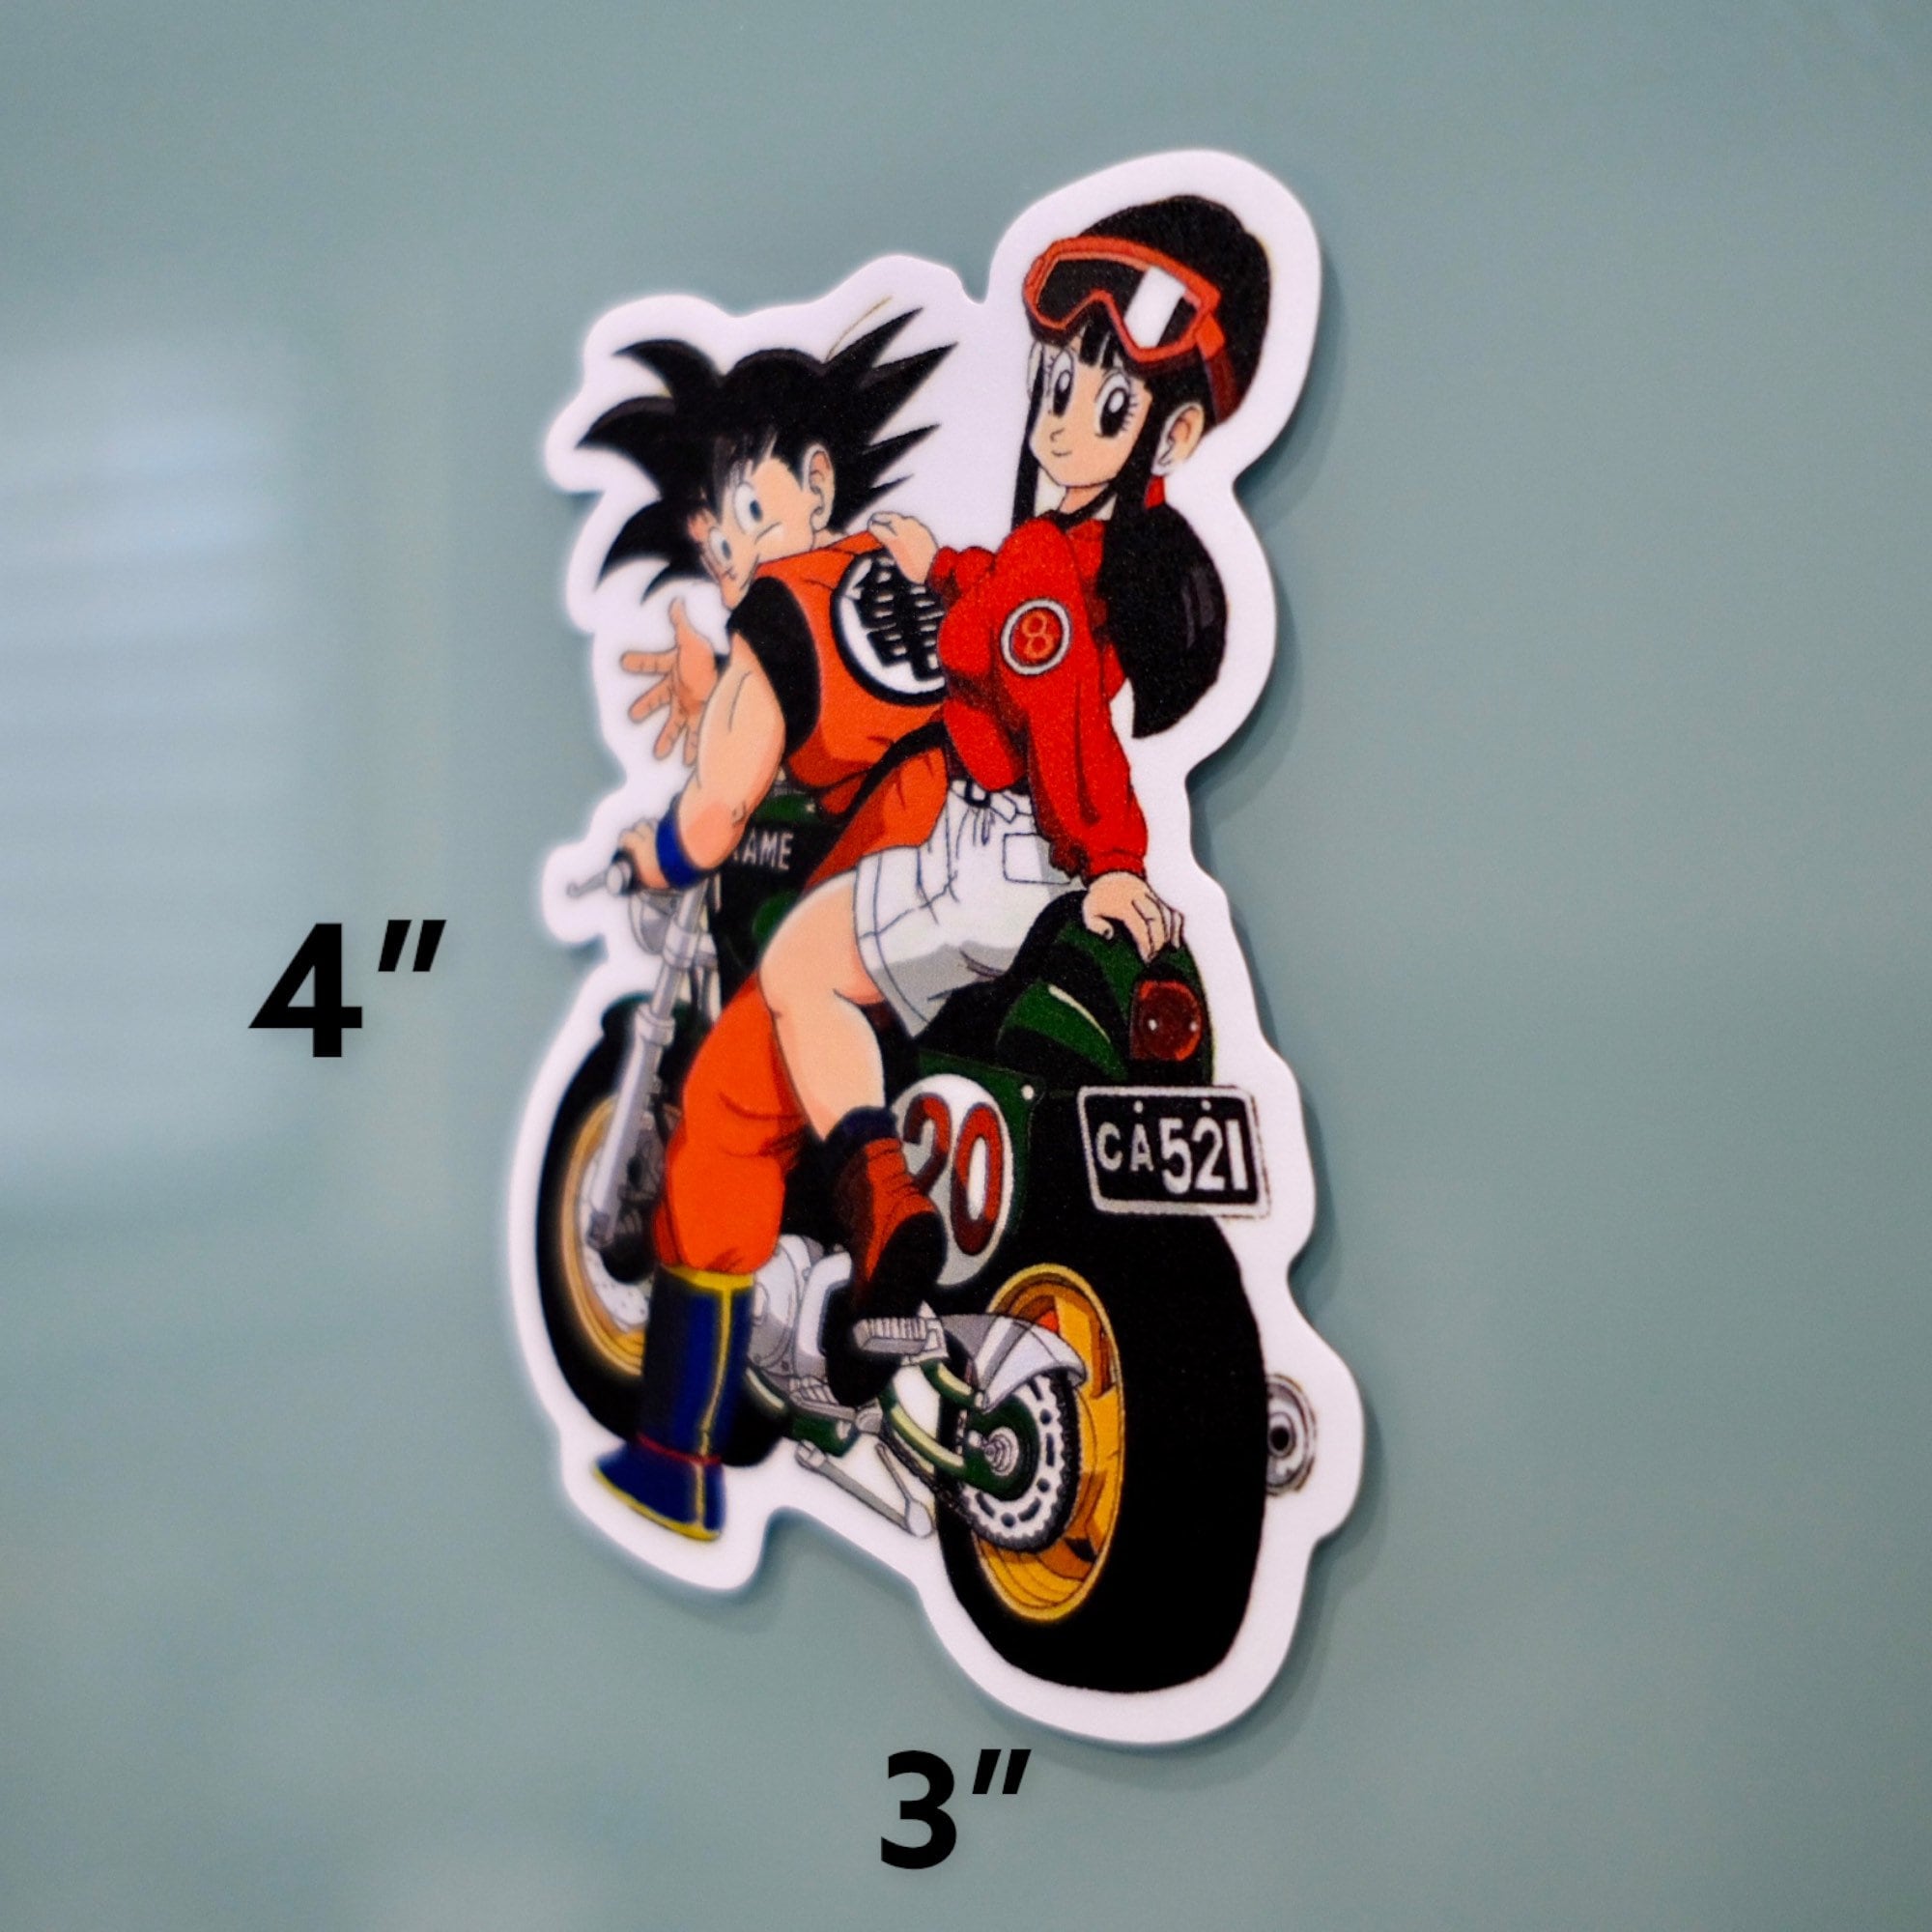 Chibi Goku Dragon Ball Z Cartoon Car Bumper Sticker Decal- 3'' or 5